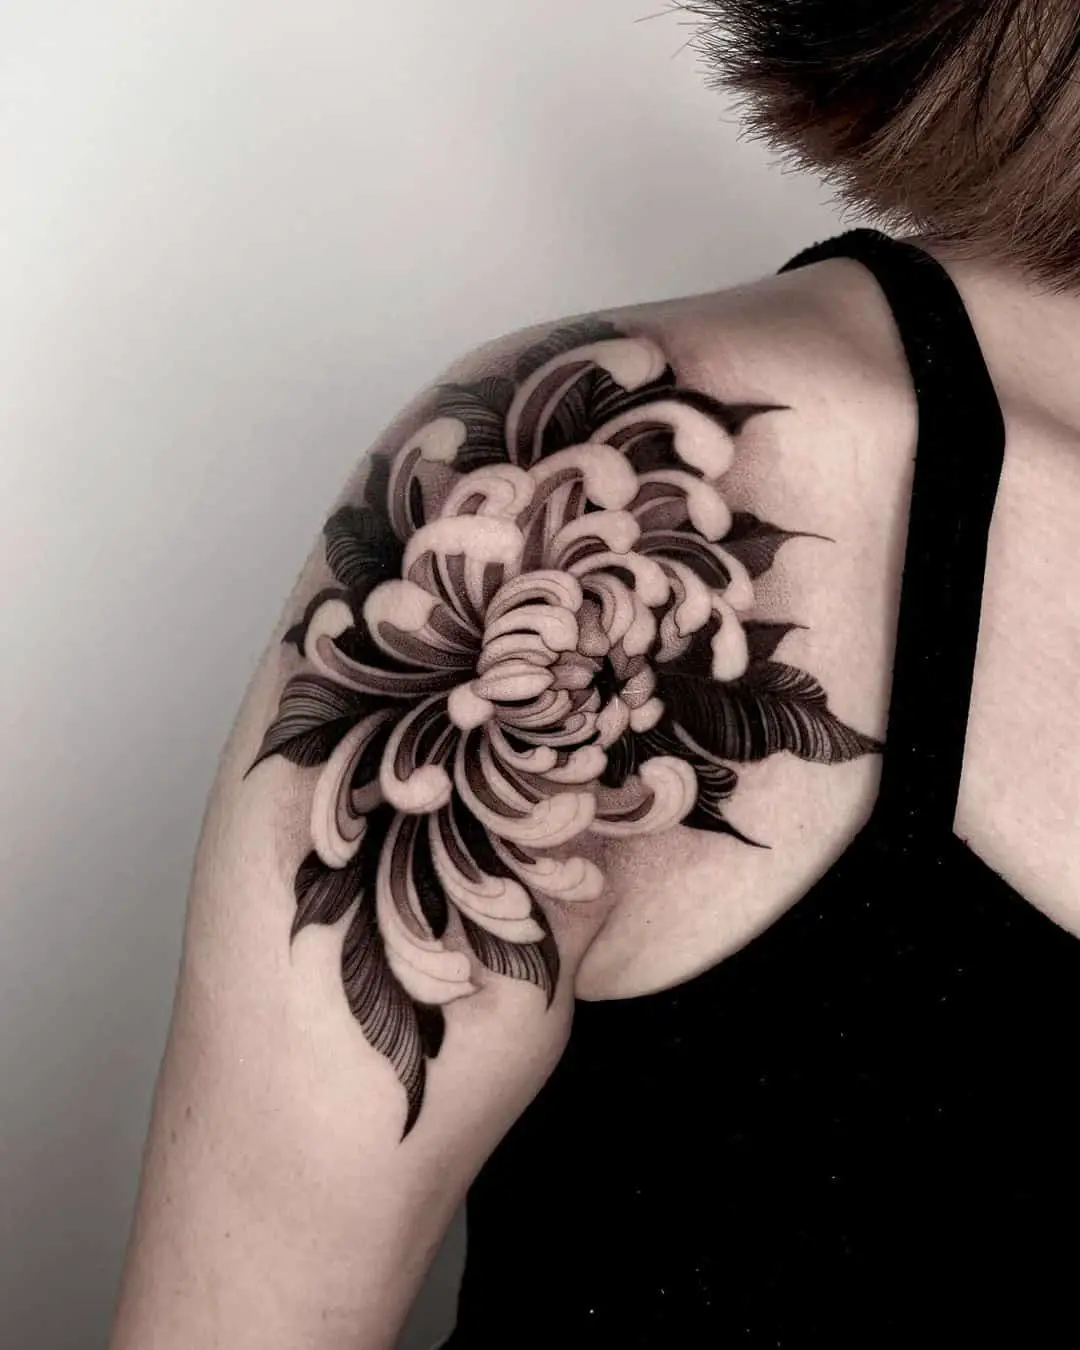 Chrysanthemum flower tattoo on shoulder by gush.like .kush